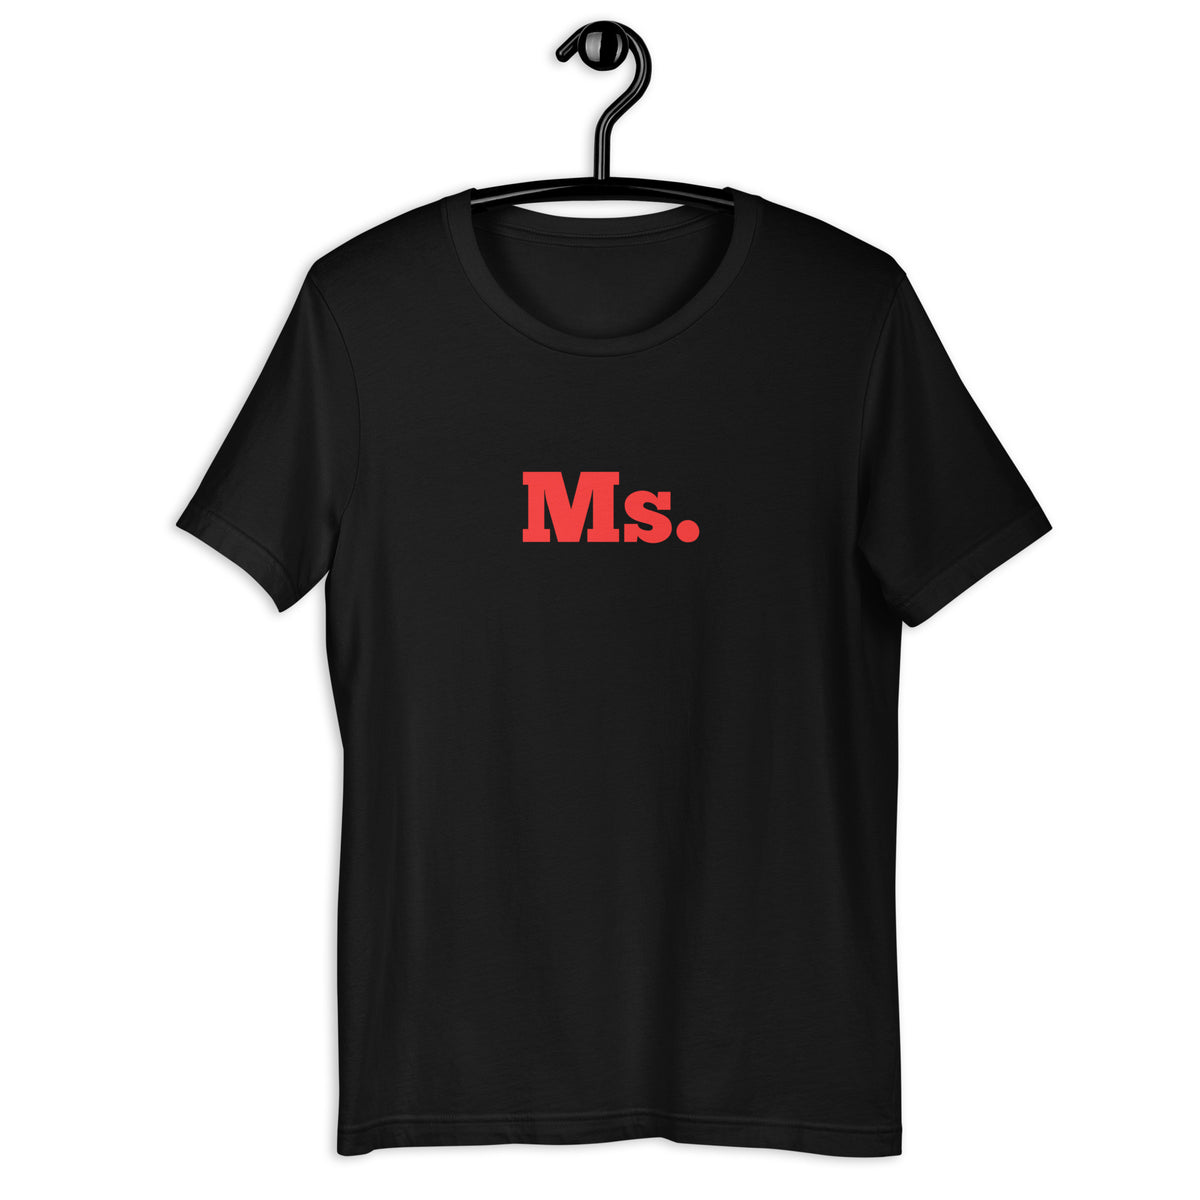 Ms Tee - Plus Size T-Shirt